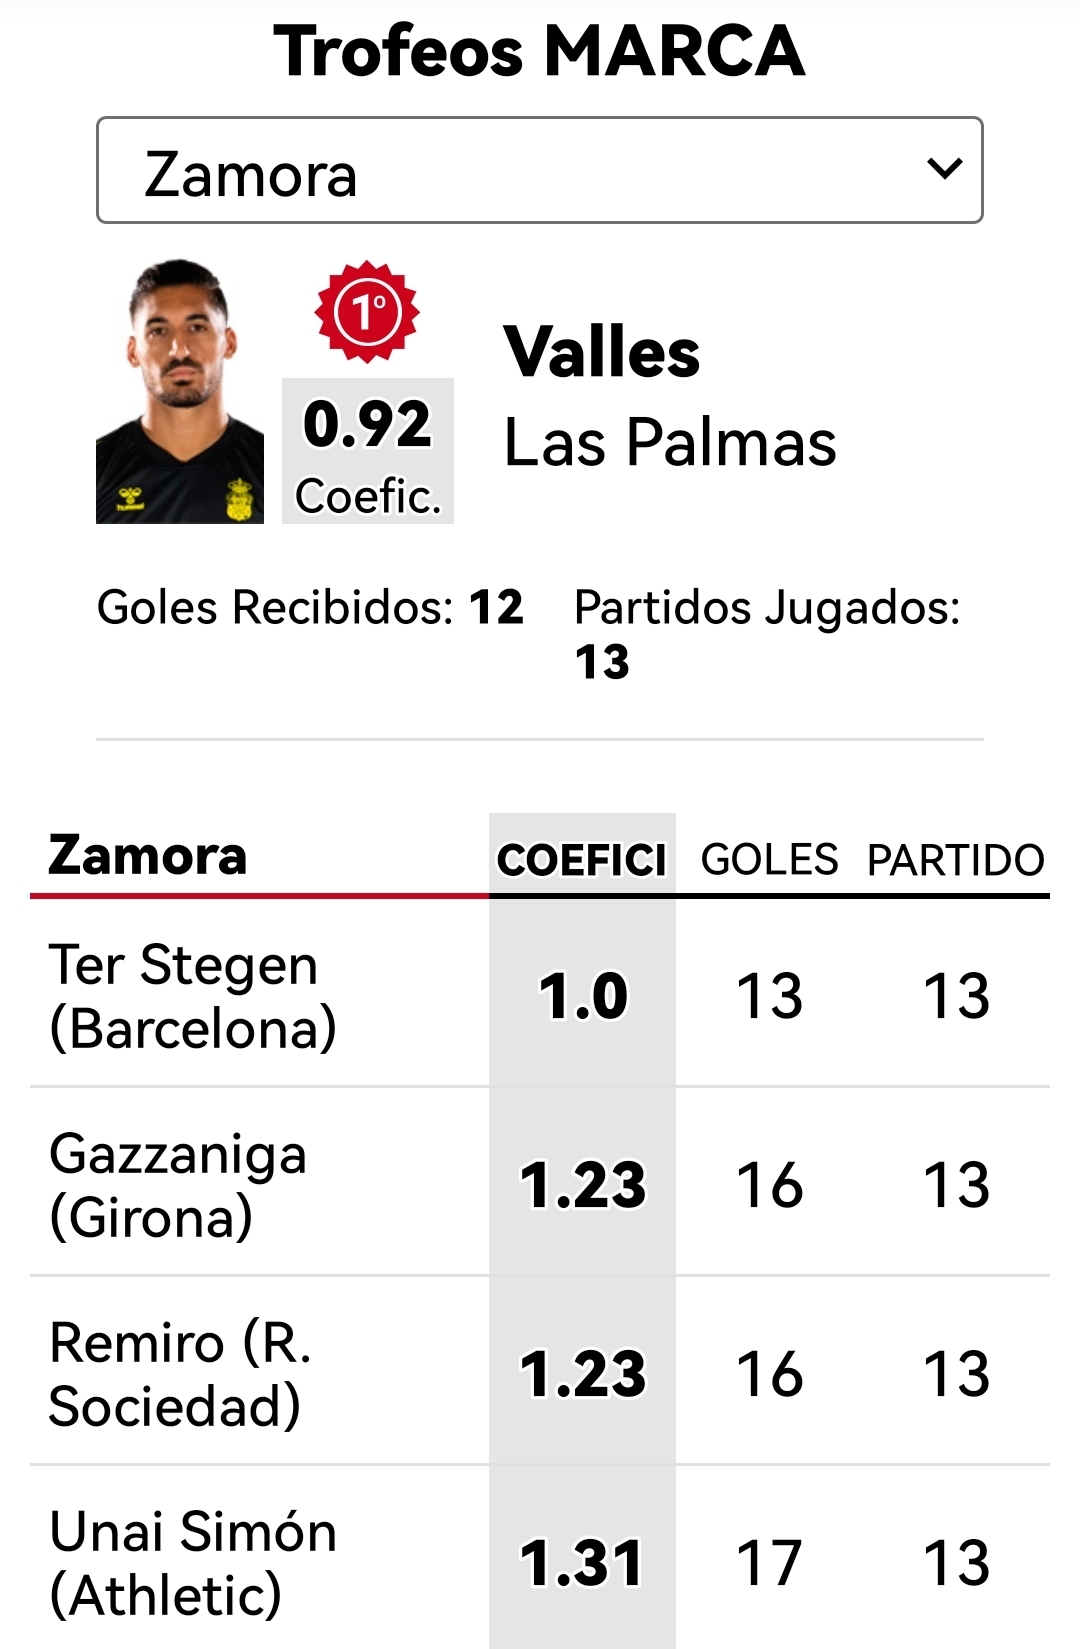 A great bargain with Las Palmas facing up